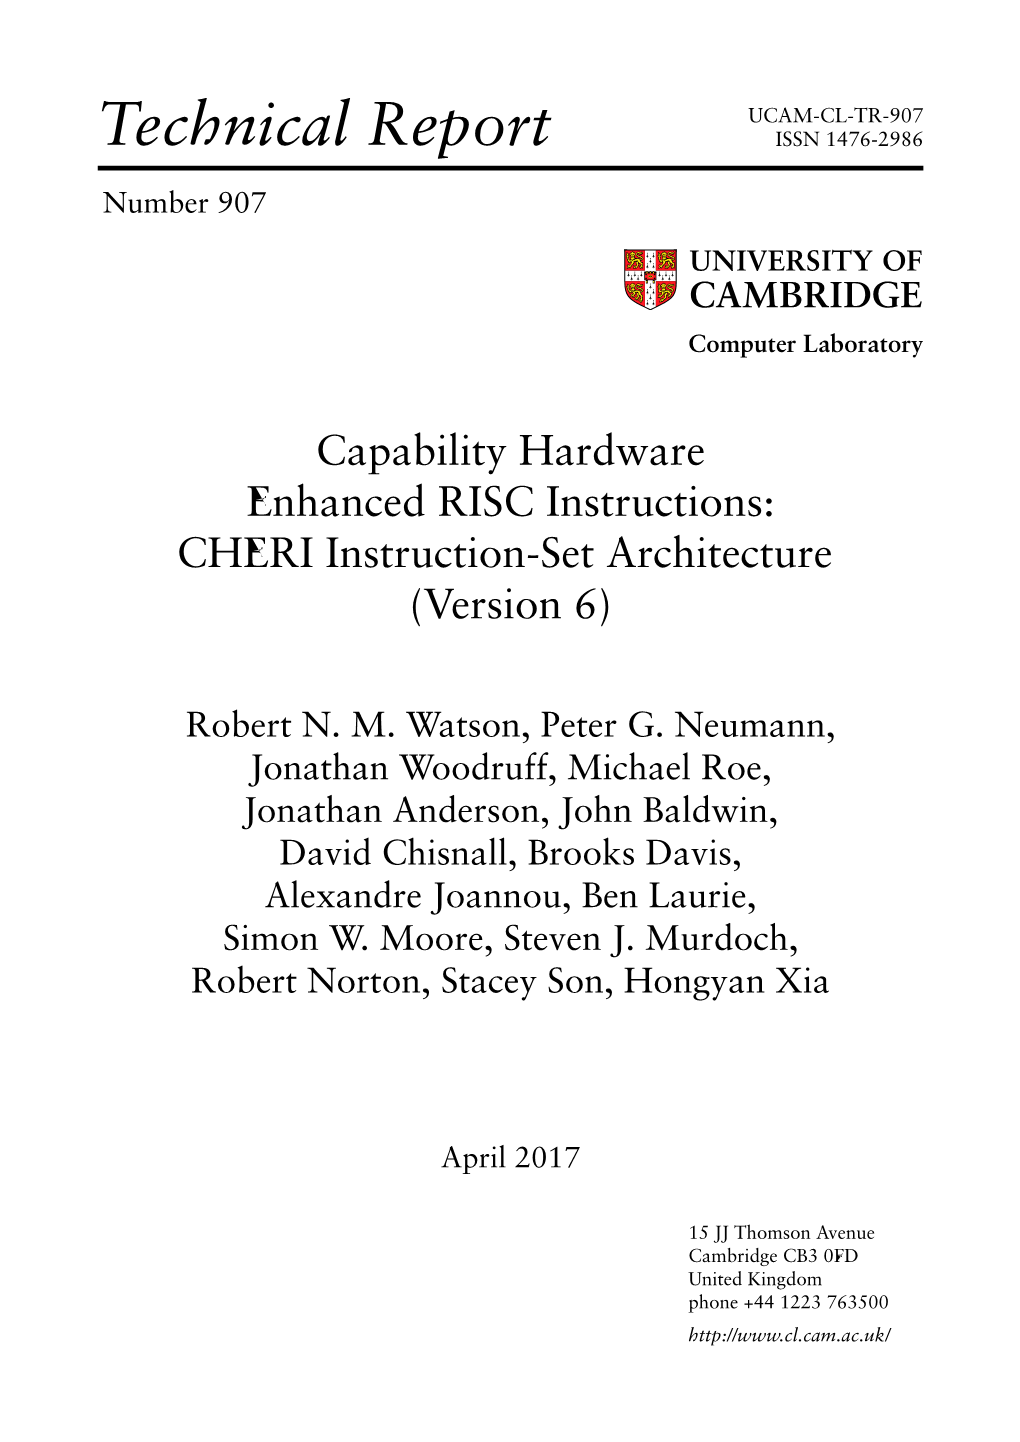 Capability Hardware Enhanced RISC Instructions: CHERI Instruction-Set Architecture (Version 6)